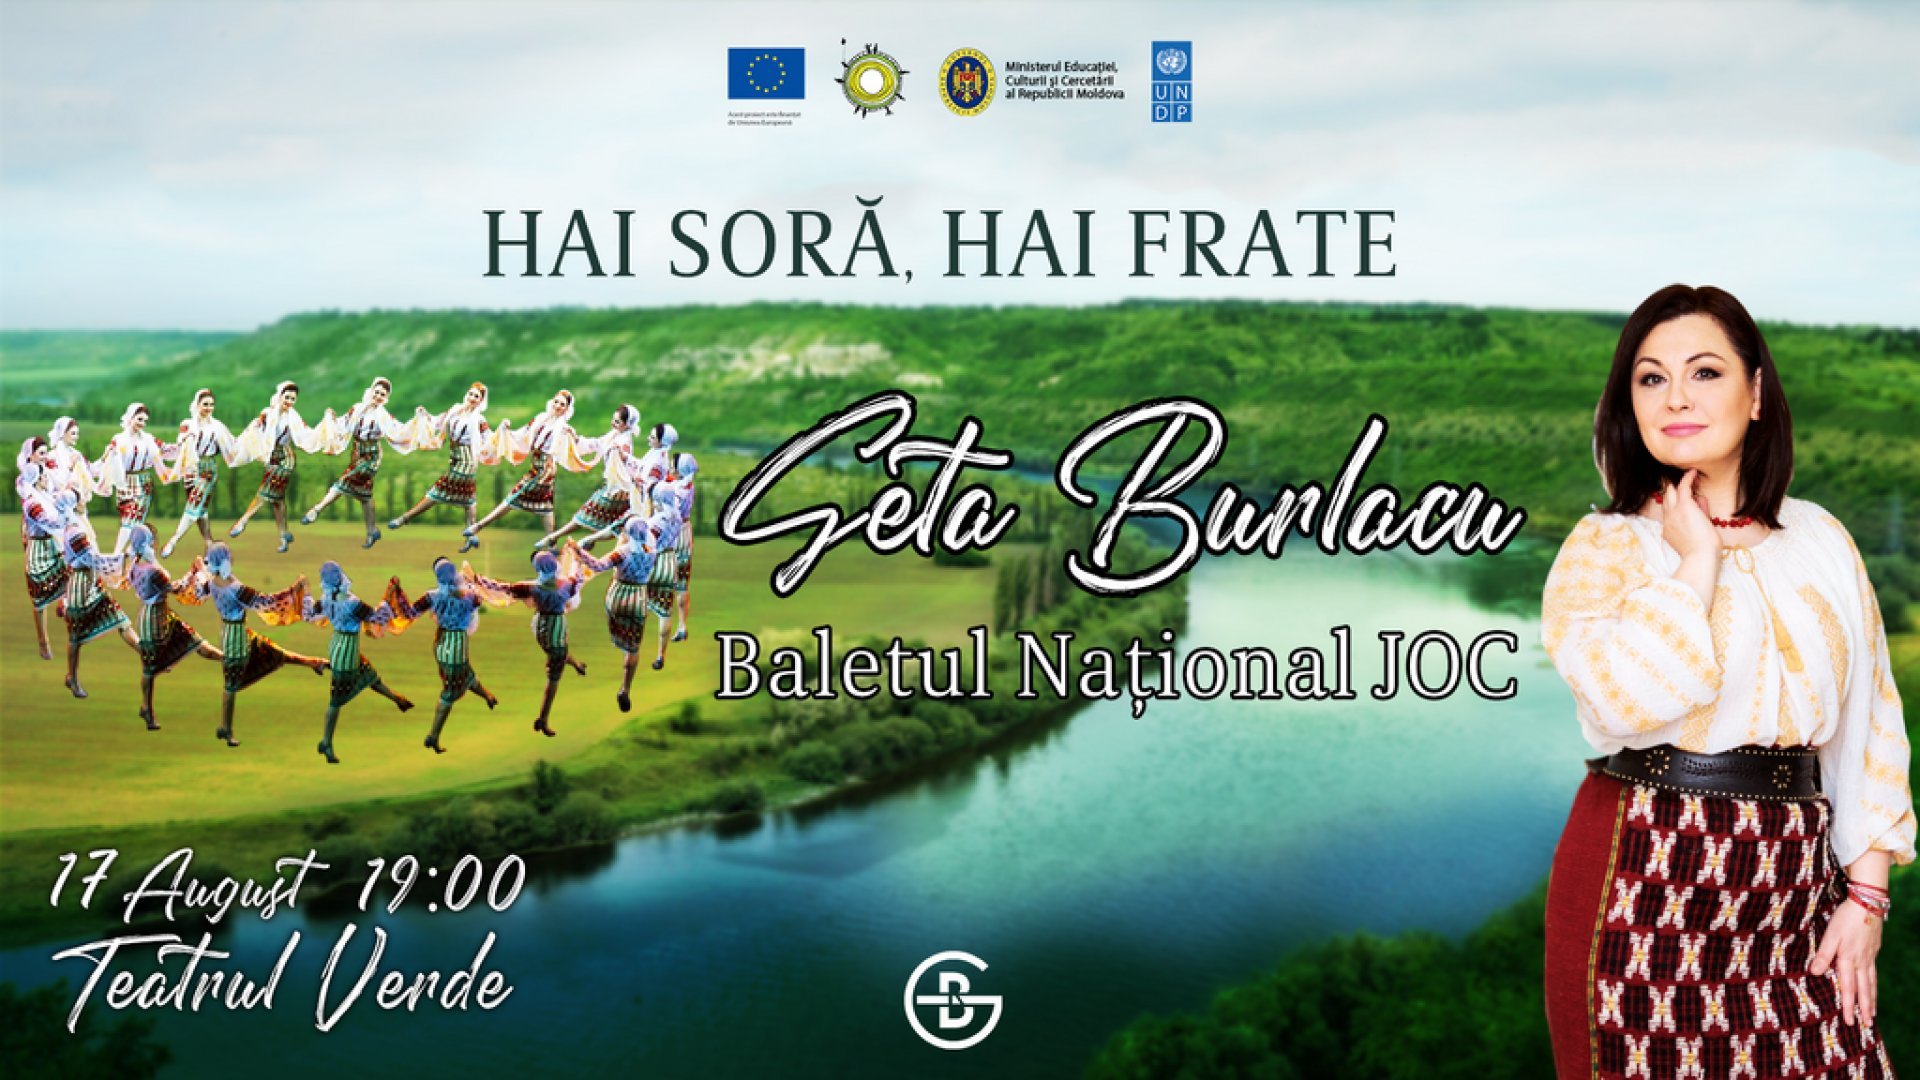 Geta Burlacu & Baletul Național JOC - “Hai soră, hai frate”